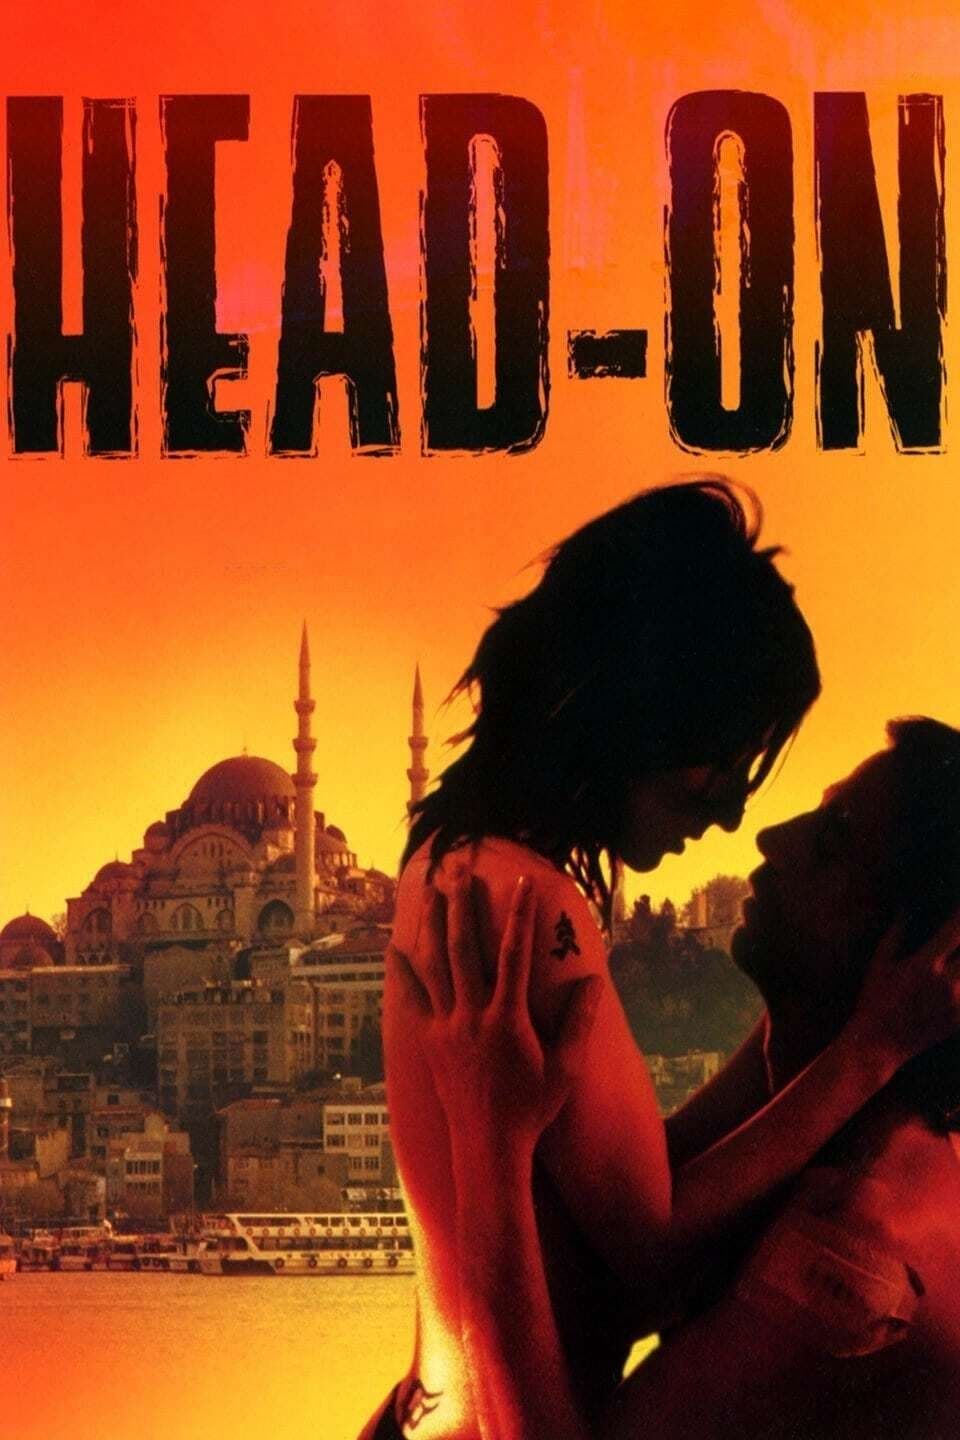 [18+] Head-On (2004) English BluRay download full movie